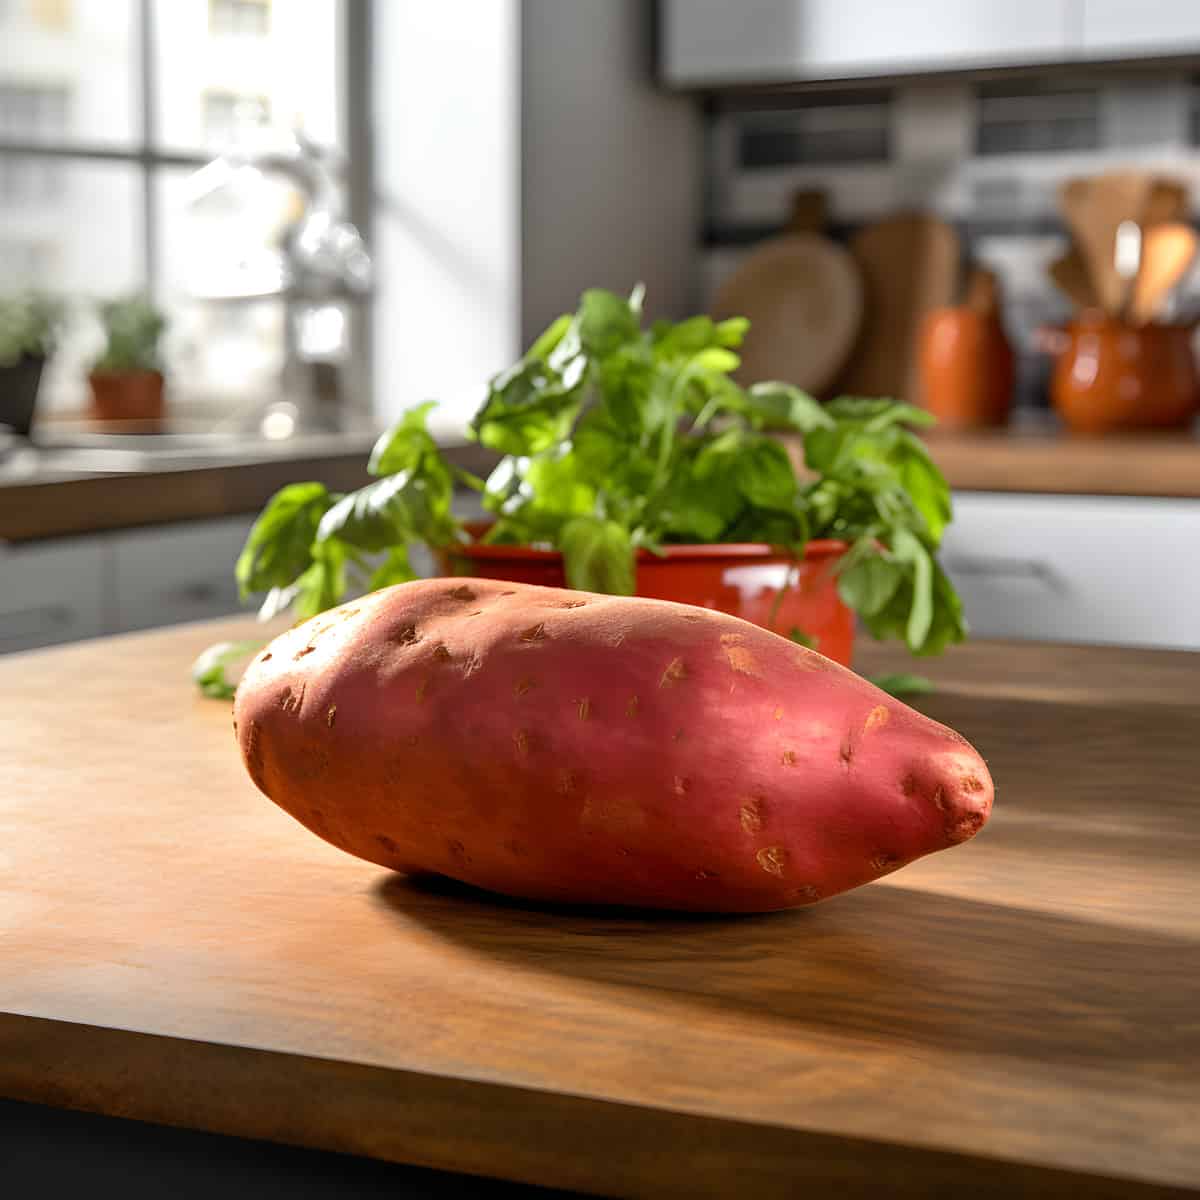 Red Garnet Sweet Potatoes on a kitchen counter